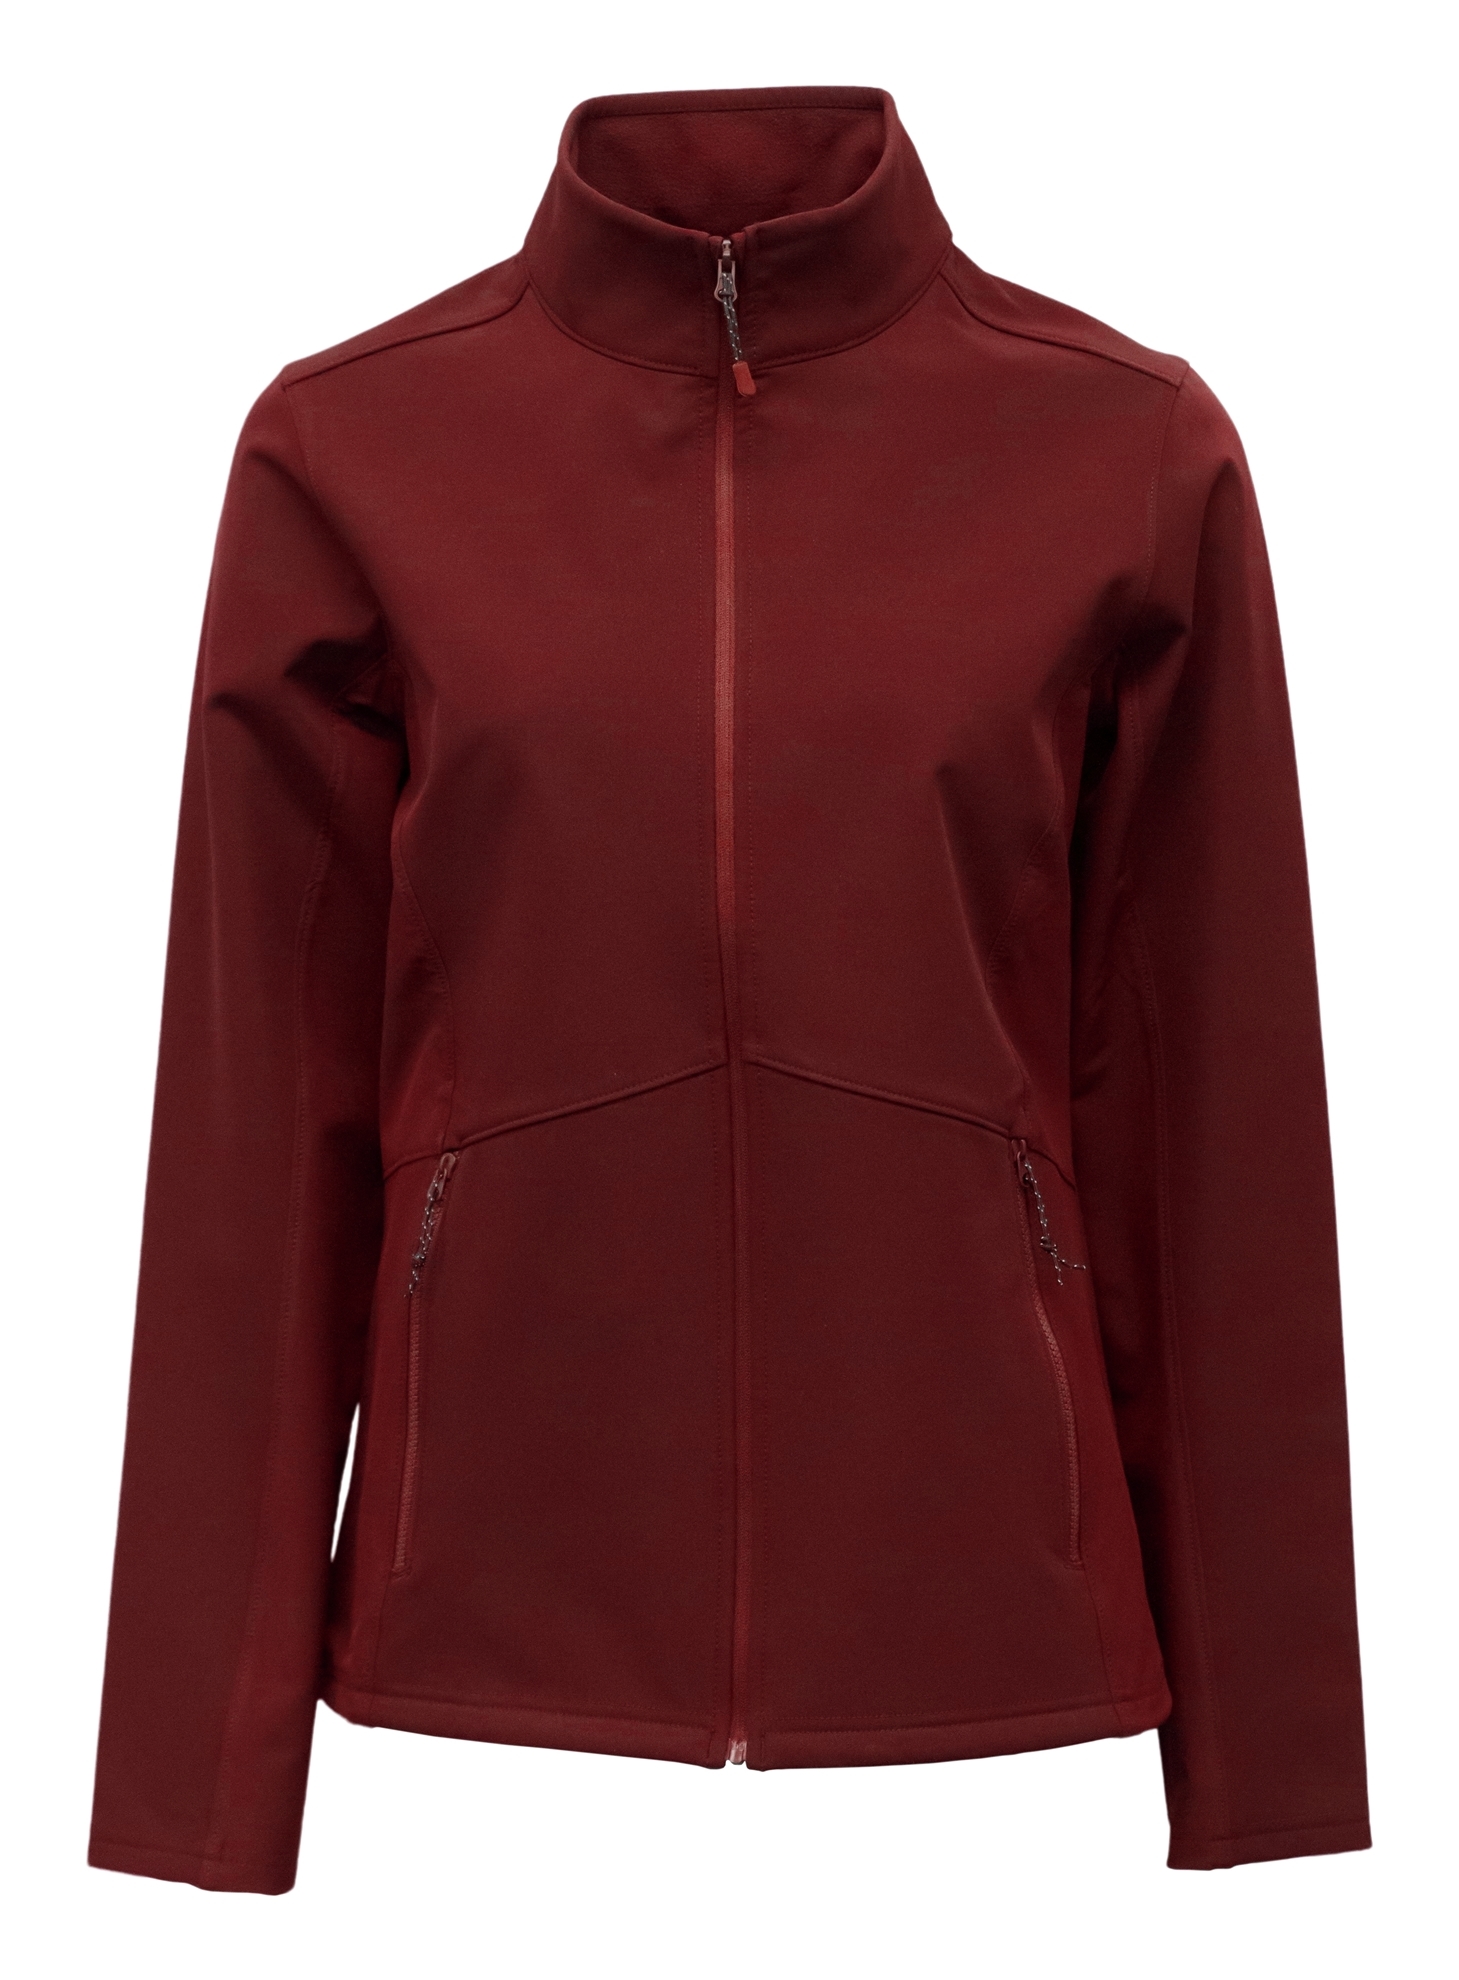 BAW Athletic Wear ST21 - Women's Softshell Jacket